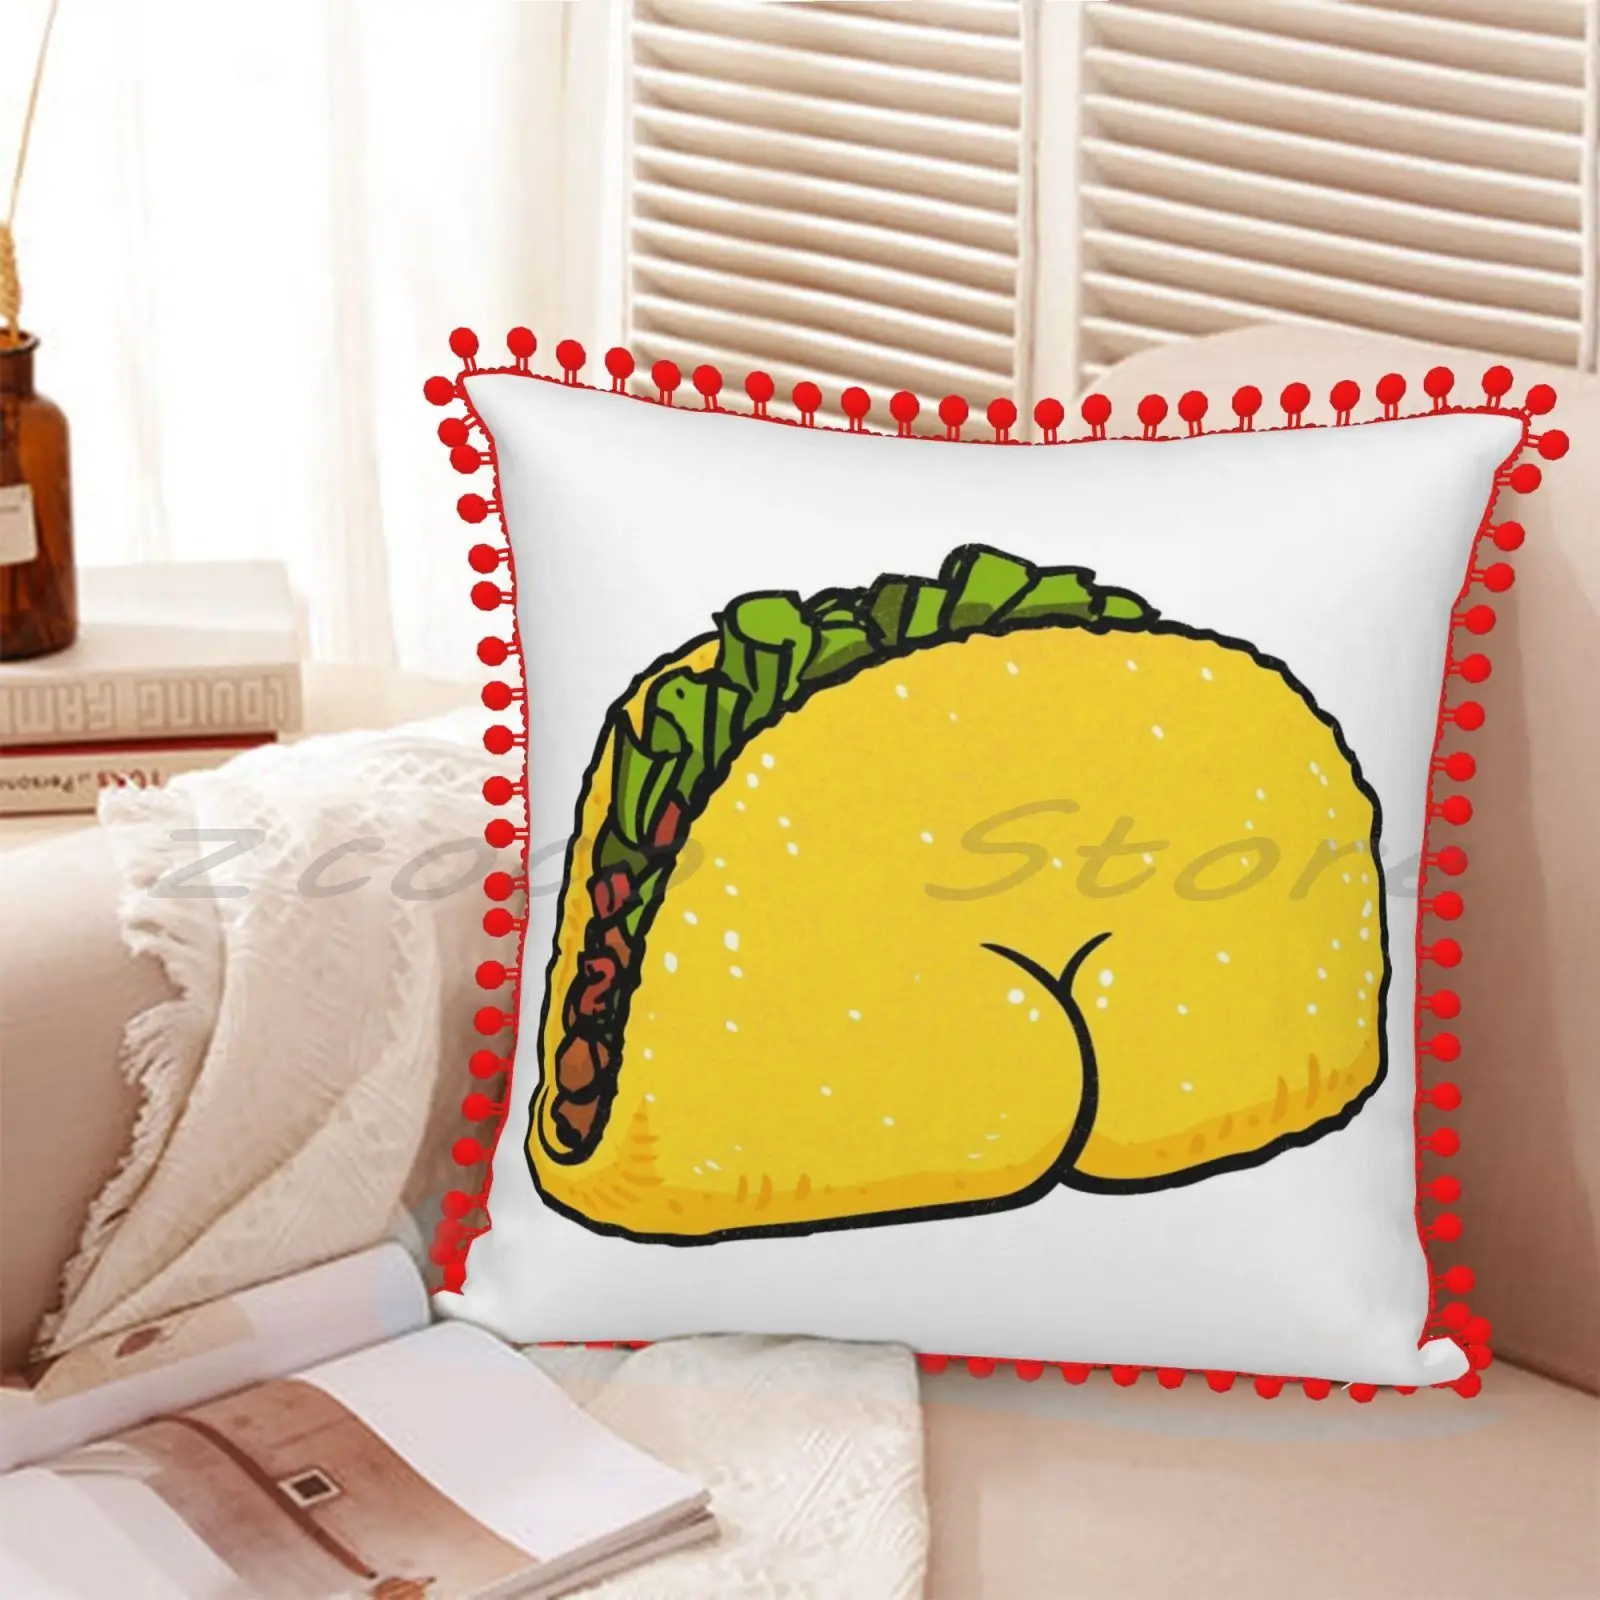 https://ae01.alicdn.com/kf/H0c7edba19cb84e94a5c9e7904991389fp/Taco-Butt-Pillowcase-Lettering-Throw-Pillow-Cover-Cotton-Flax-Plush-Pompom-Taco-Mexico-Mexican-Texas-Texmex.jpg